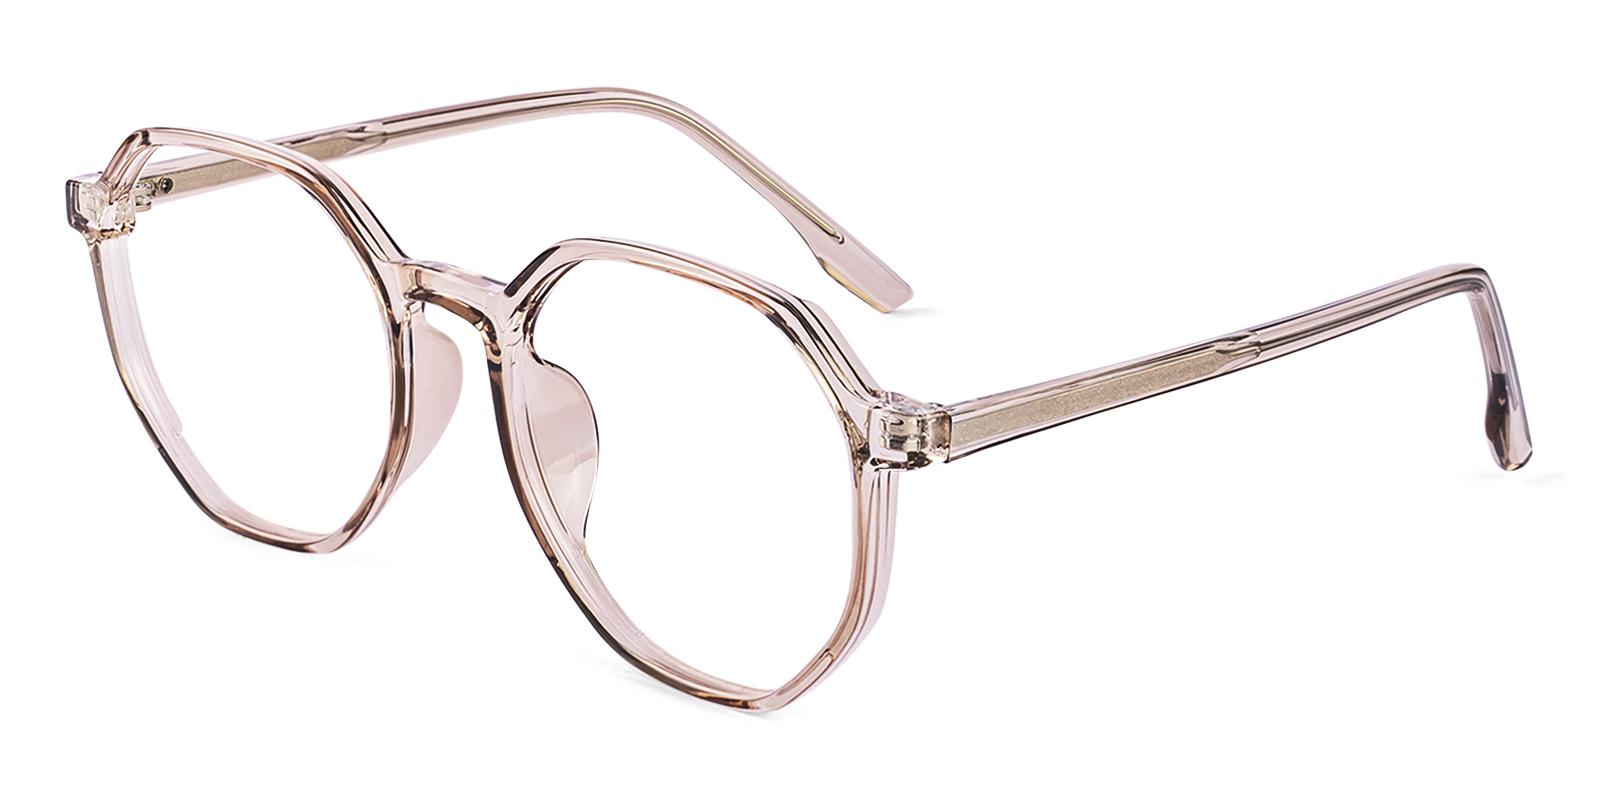 Nasccoach Brown Plastic Eyeglasses , UniversalBridgeFit Frames from ABBE Glasses